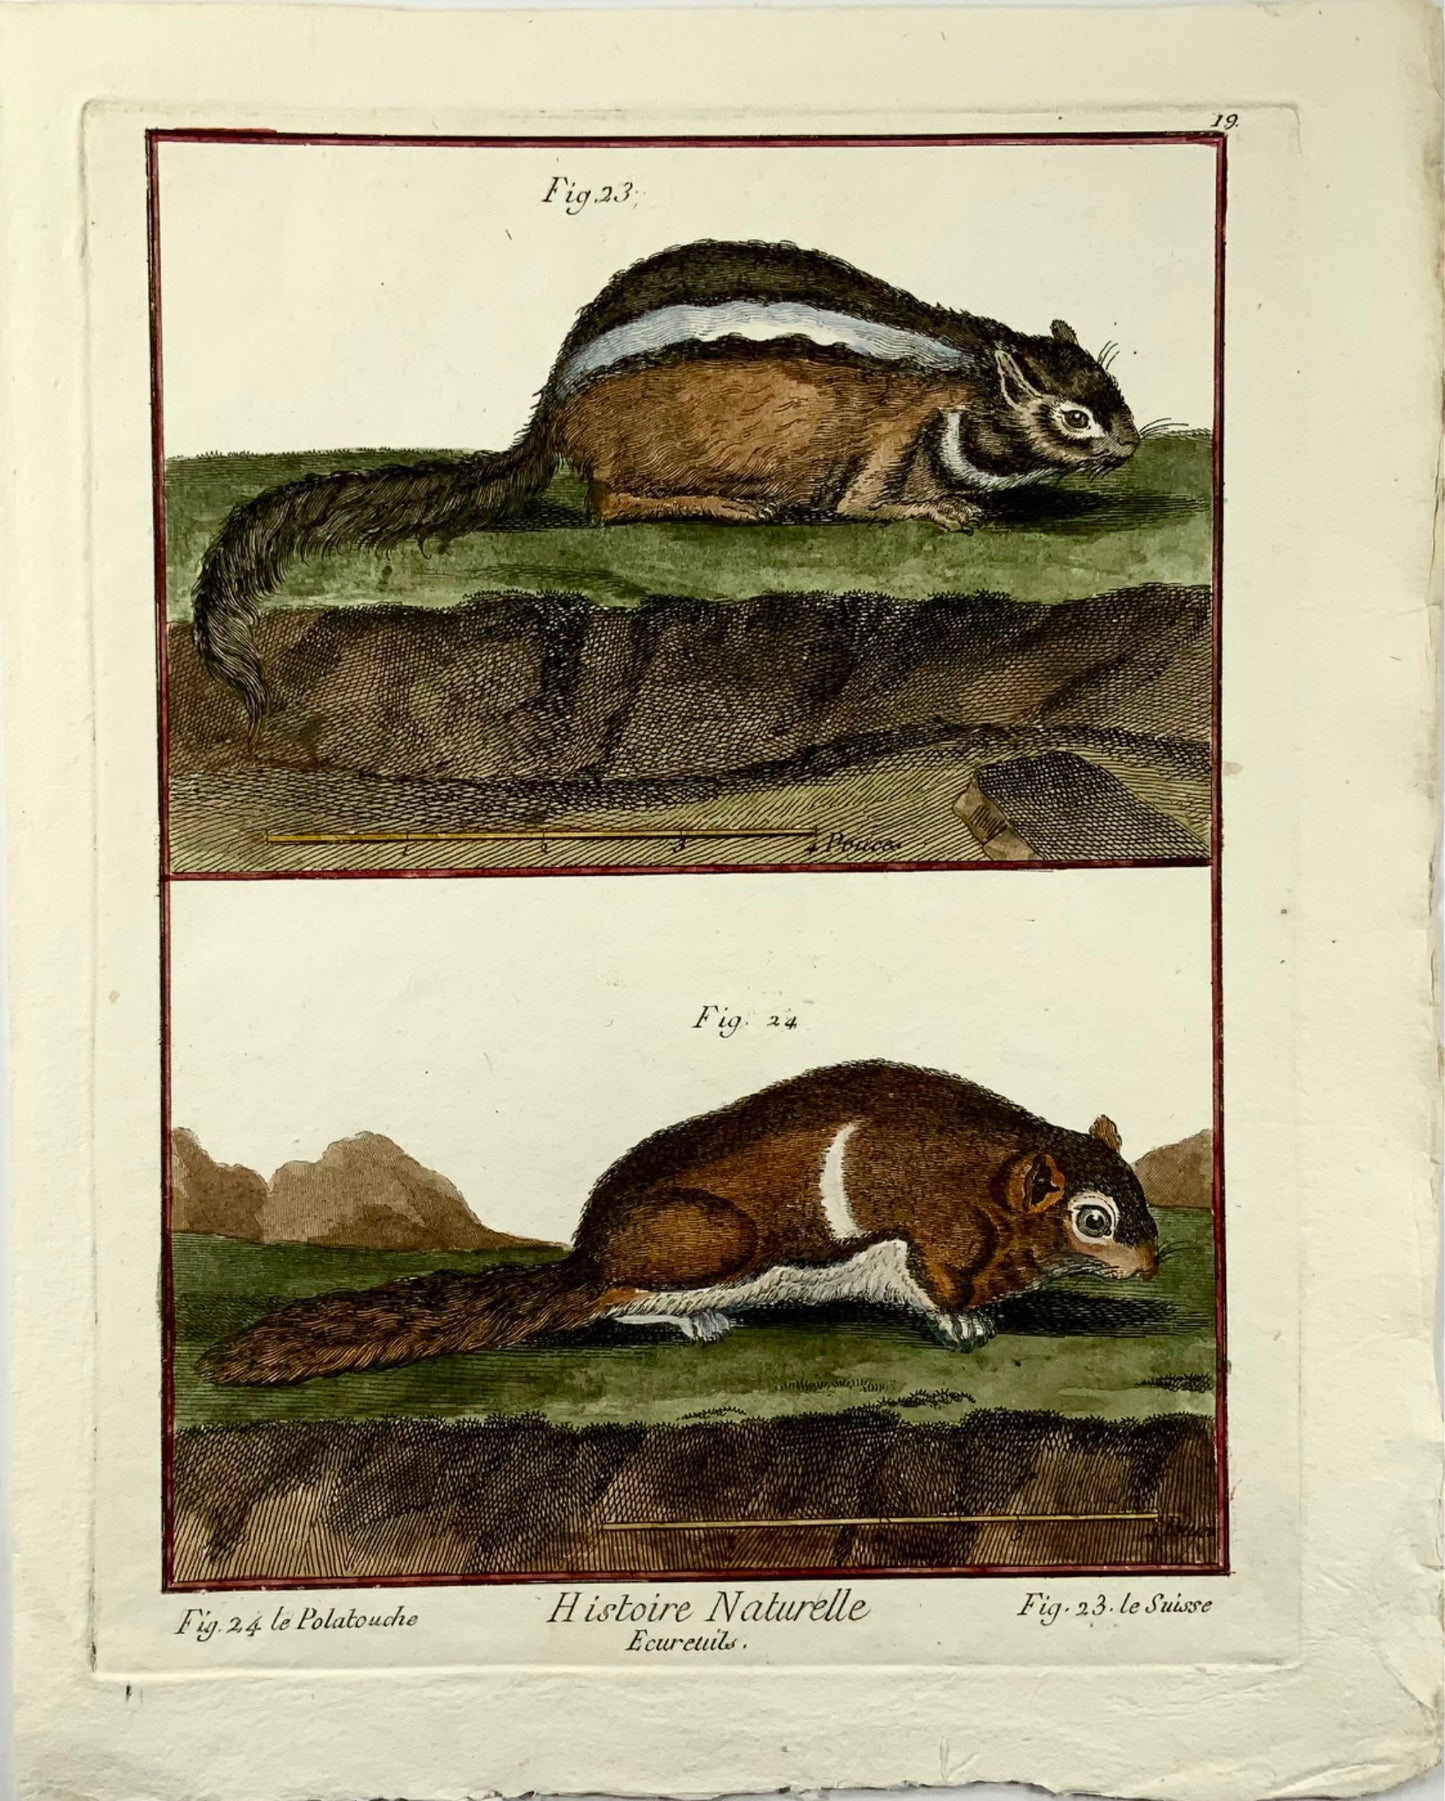 1780 c Flying Squirrels, mammals, Diderot quarto edition, hand coloured